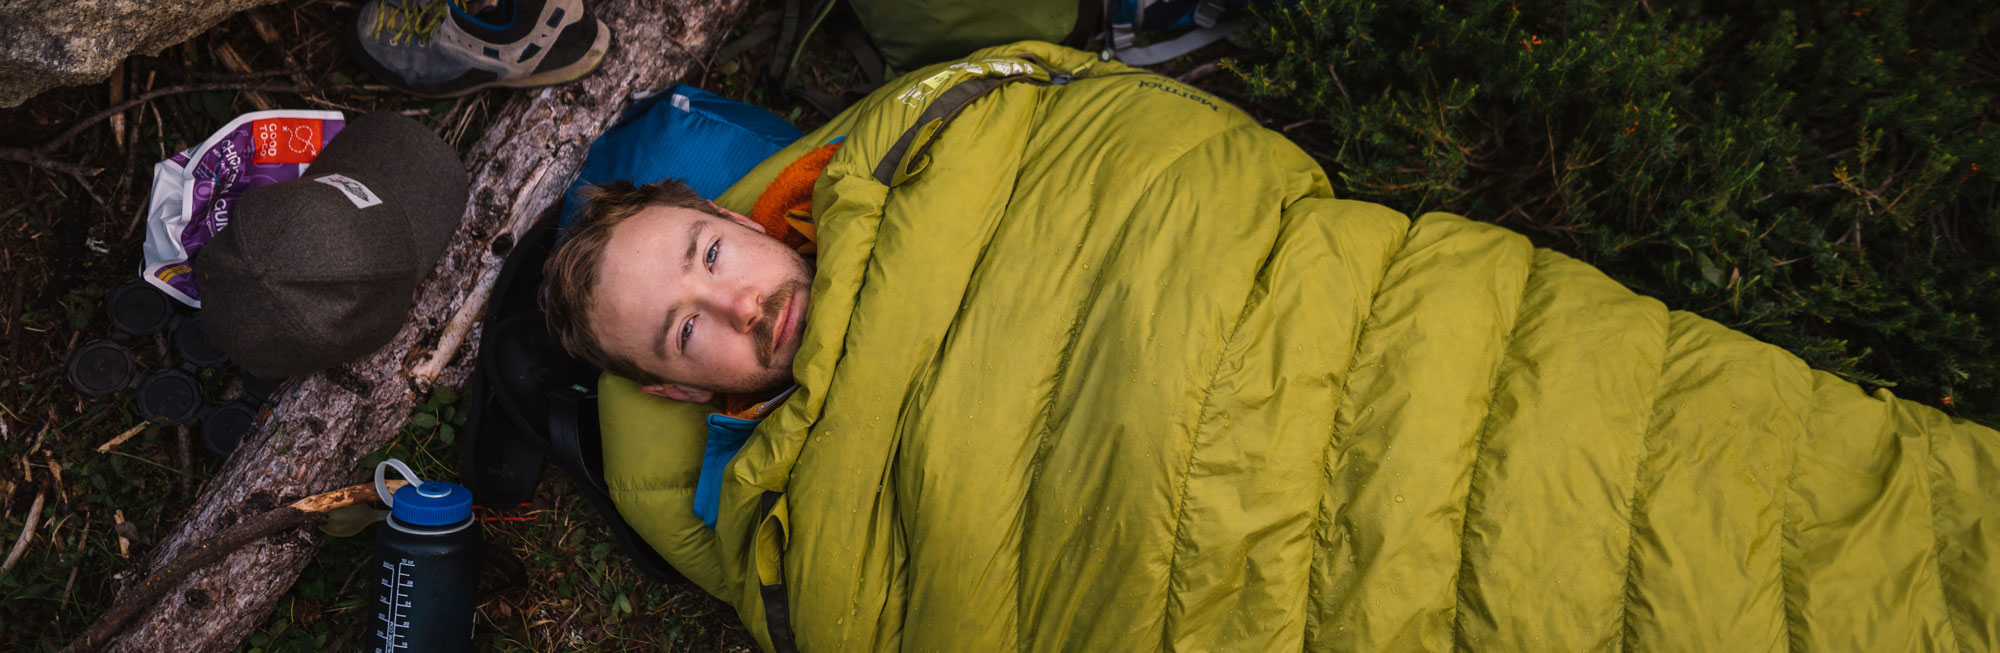 Marmot Trestles Elite Eco 20 Long Sleeping Bag left - Sleeping Bags -  Camping - Outdoor - All